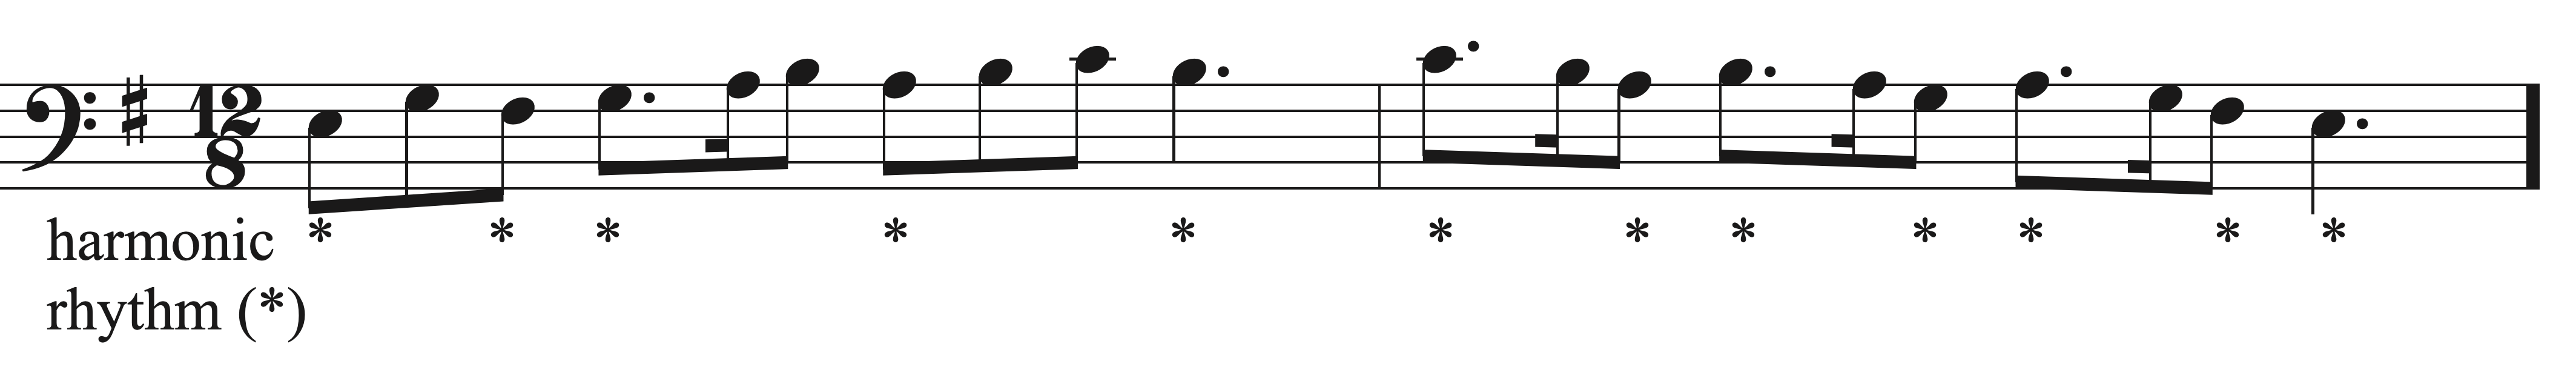 Harmonizing with Seventh Chords Sight Singing exercise example